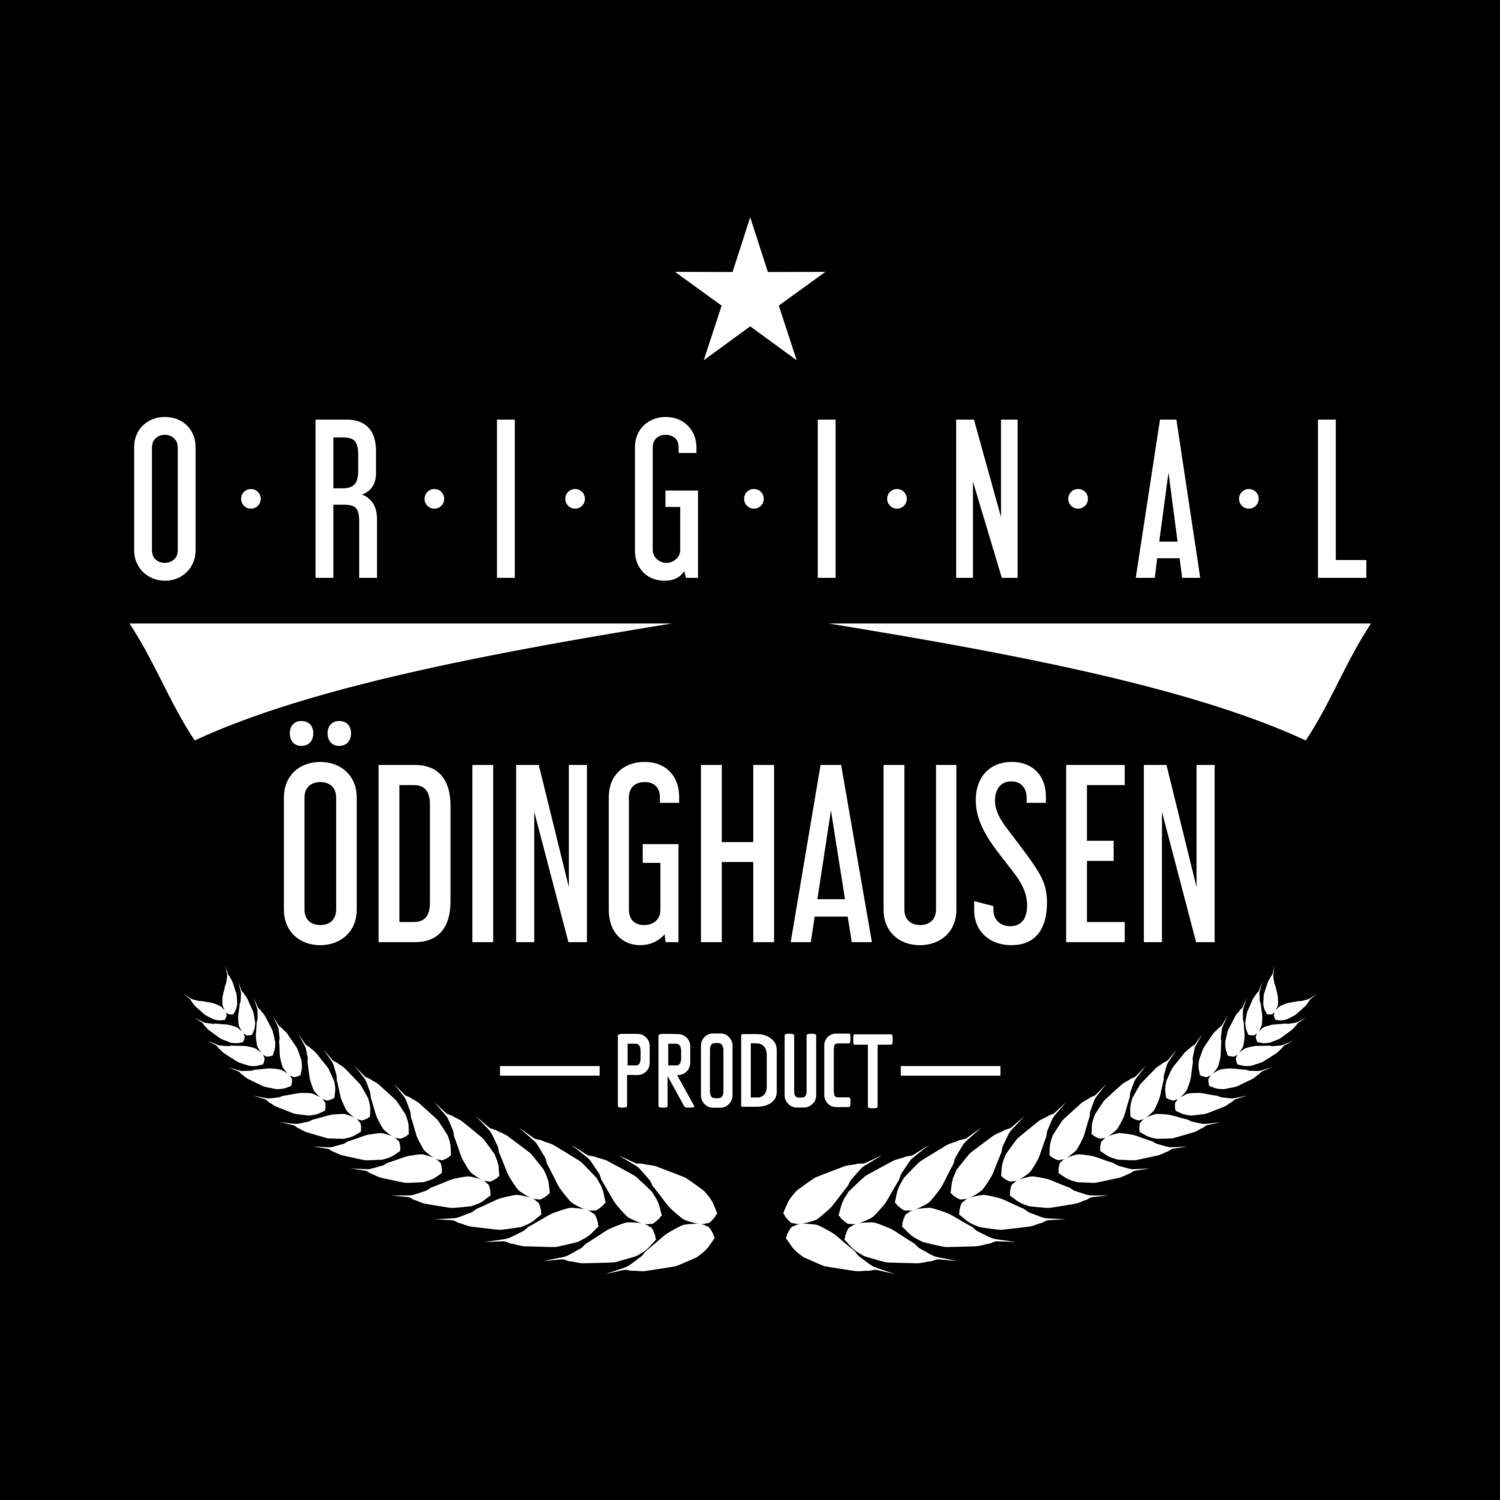 Ödinghausen T-Shirt »Original Product«